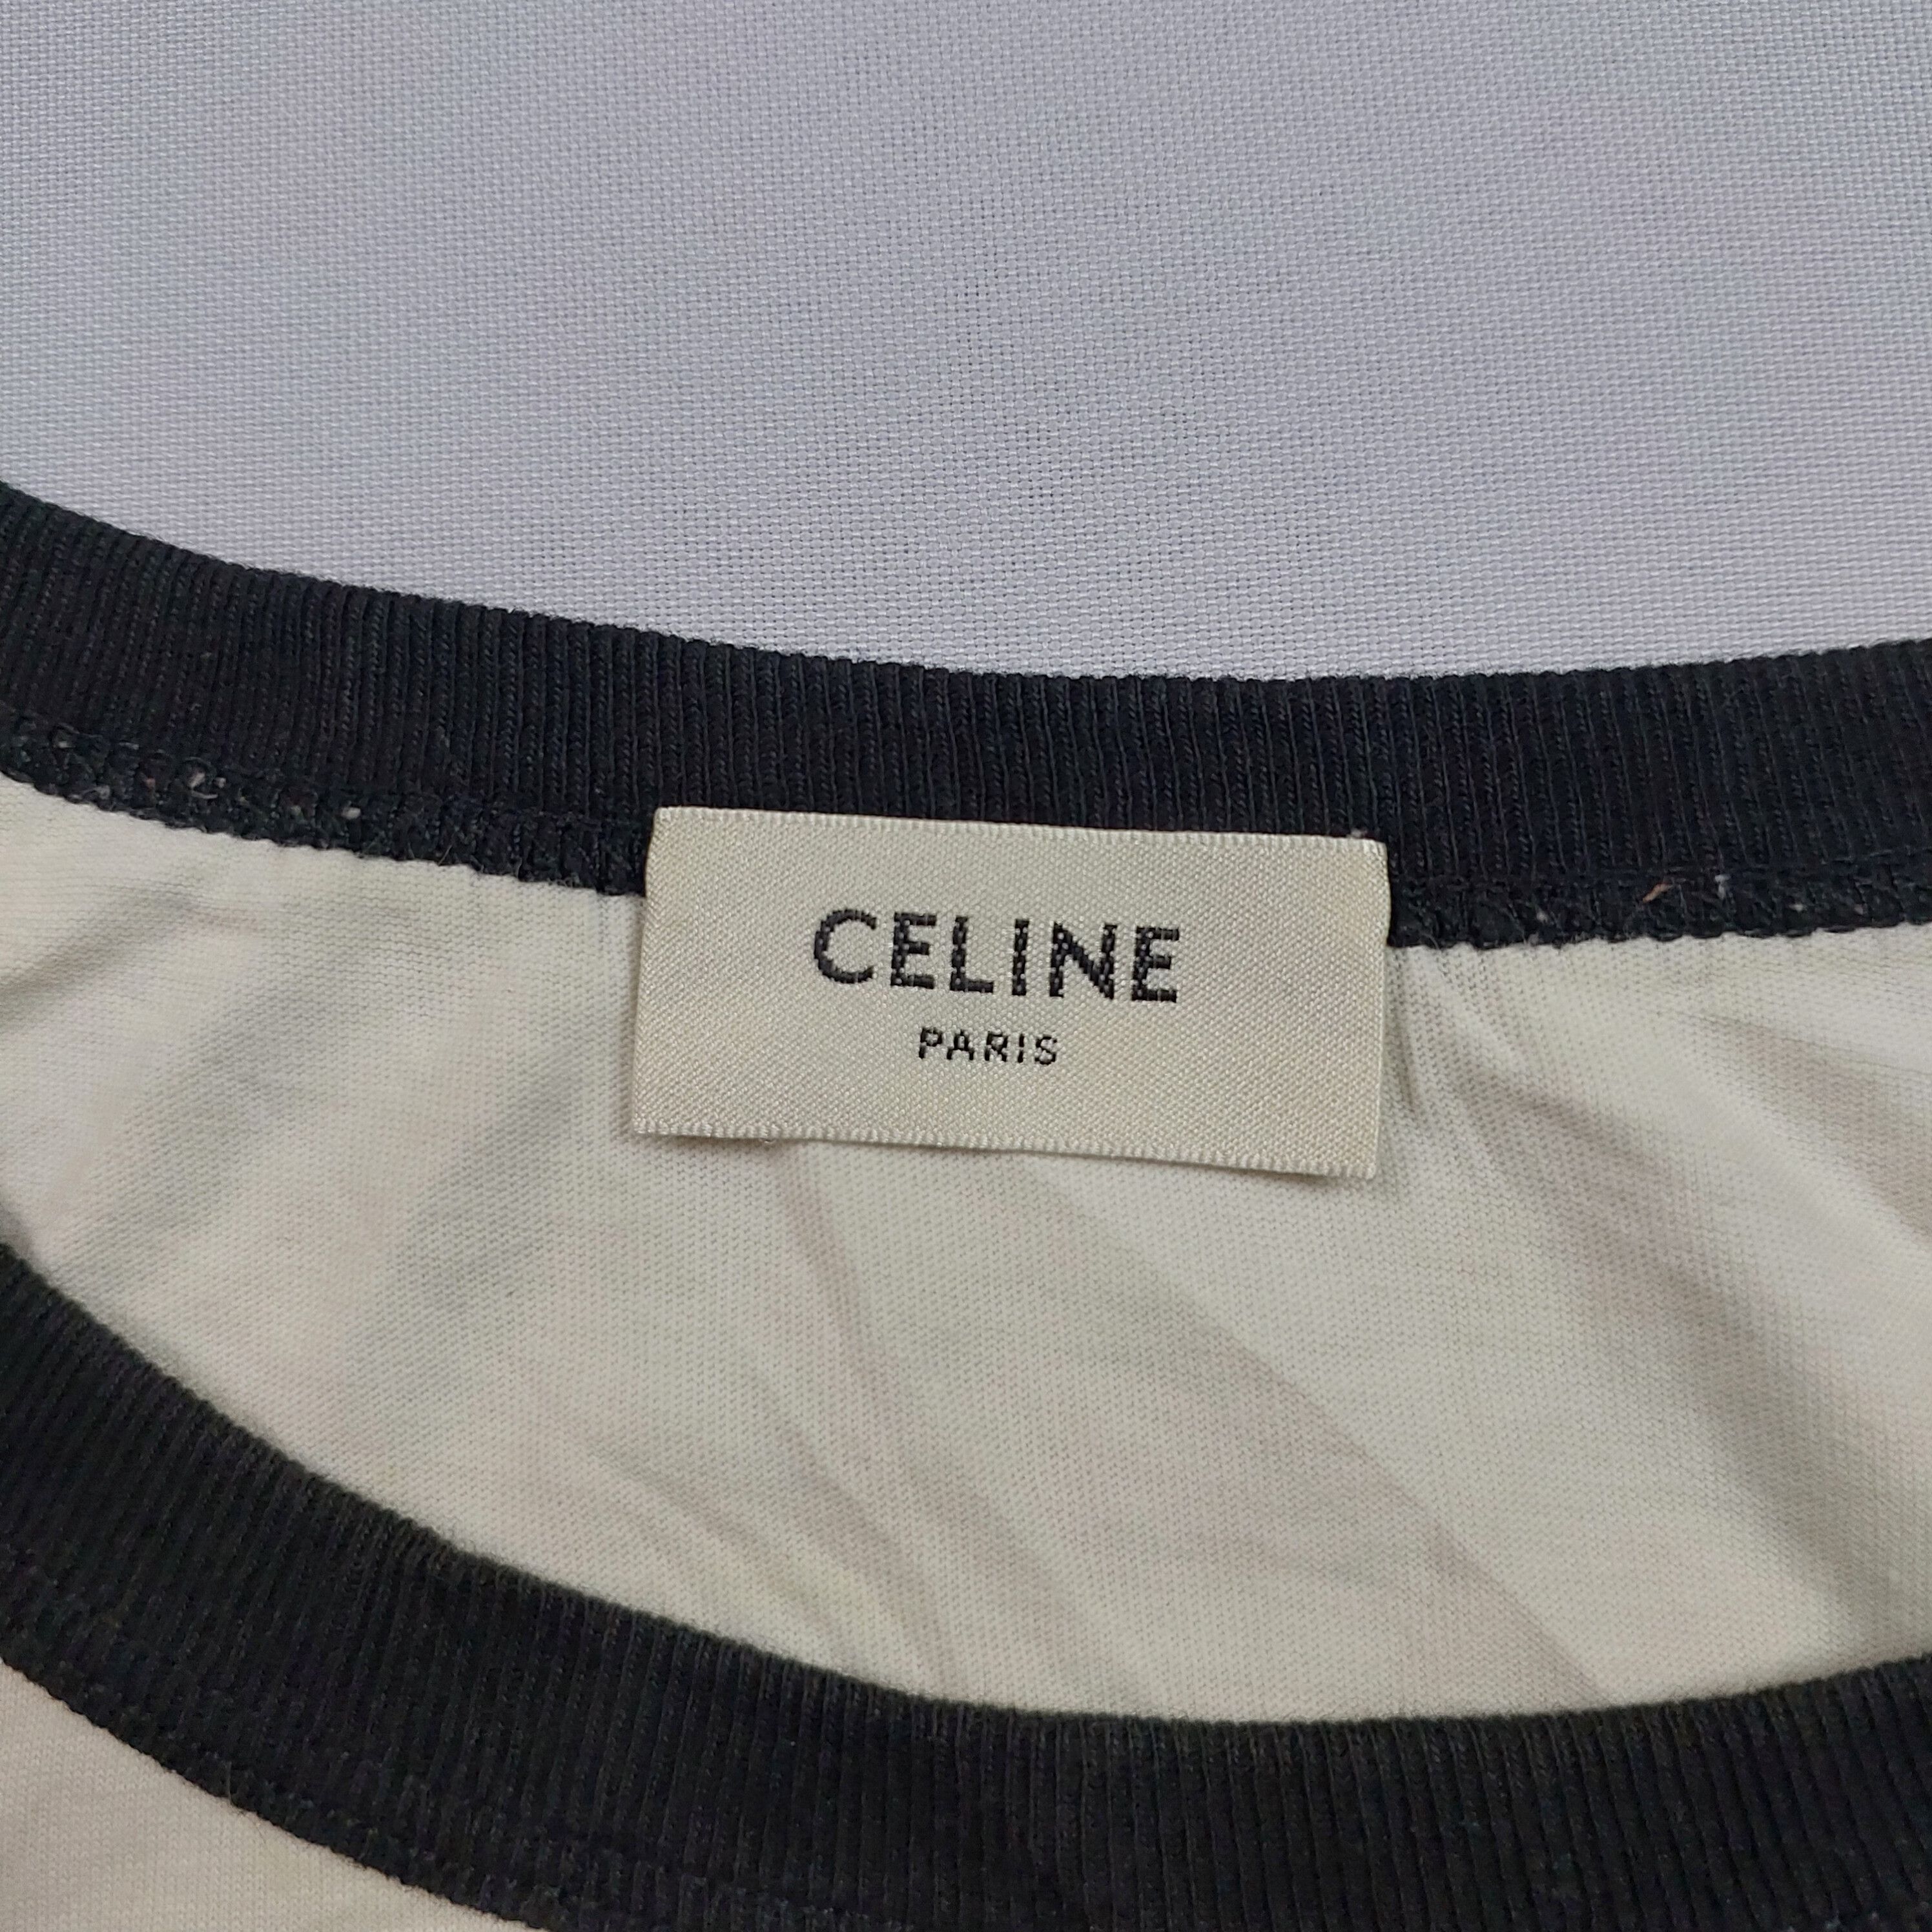 Celine - Graphic Print - Shirt - 4